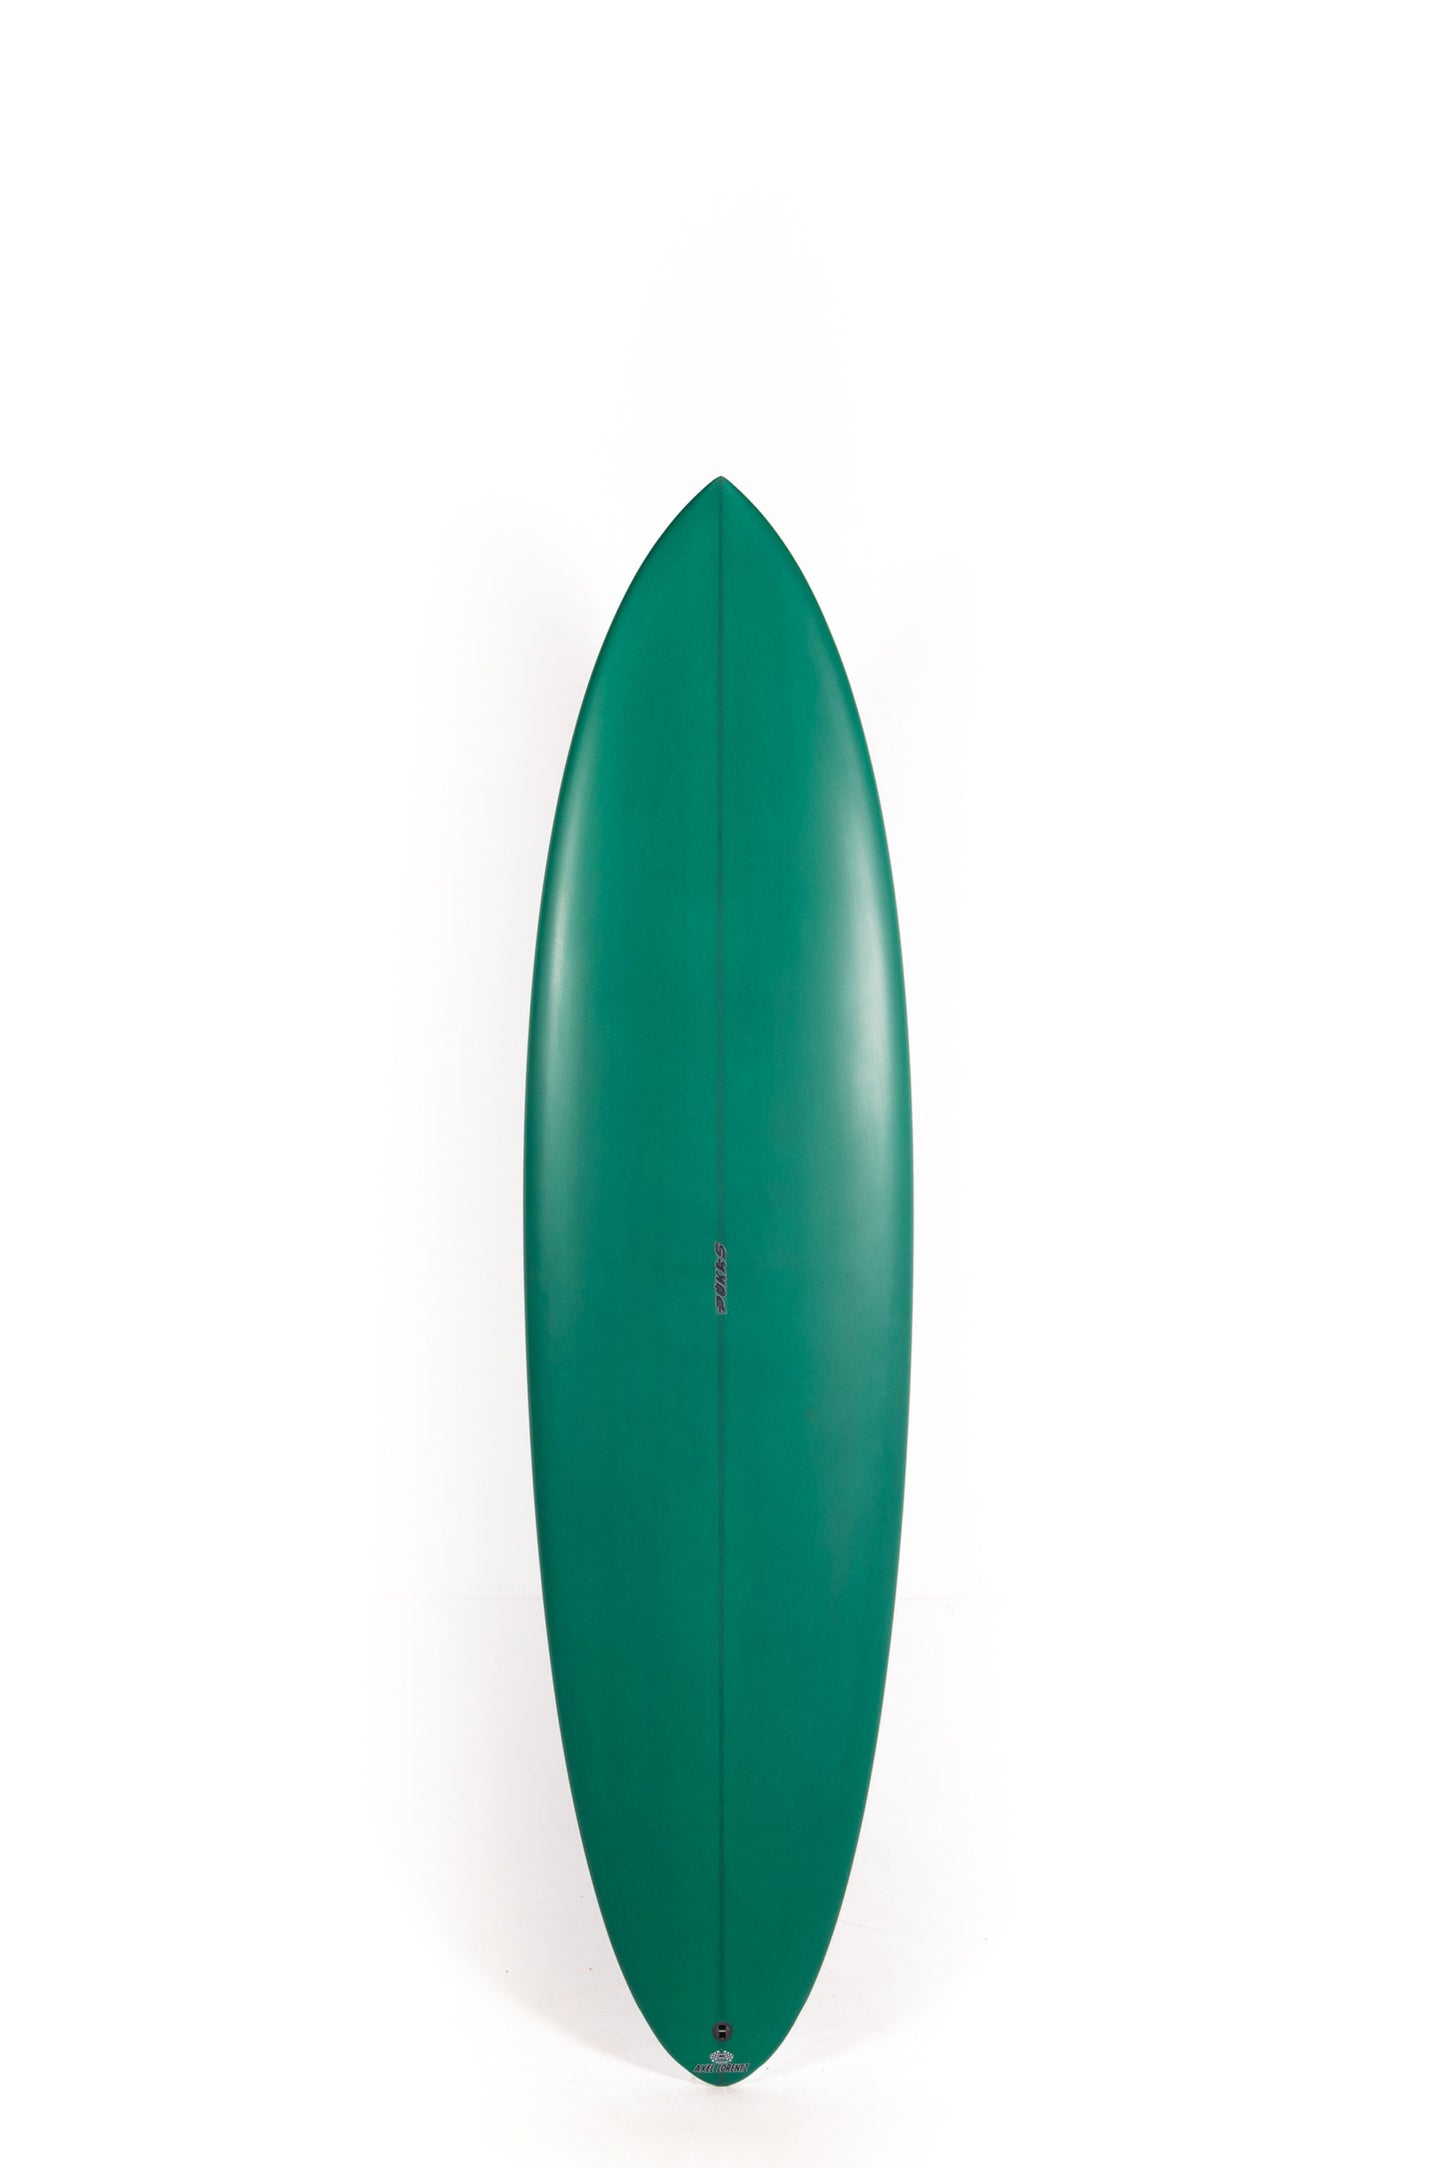 Pukas Surf Shop Pukas Surfboards Lady Twin 7'2"